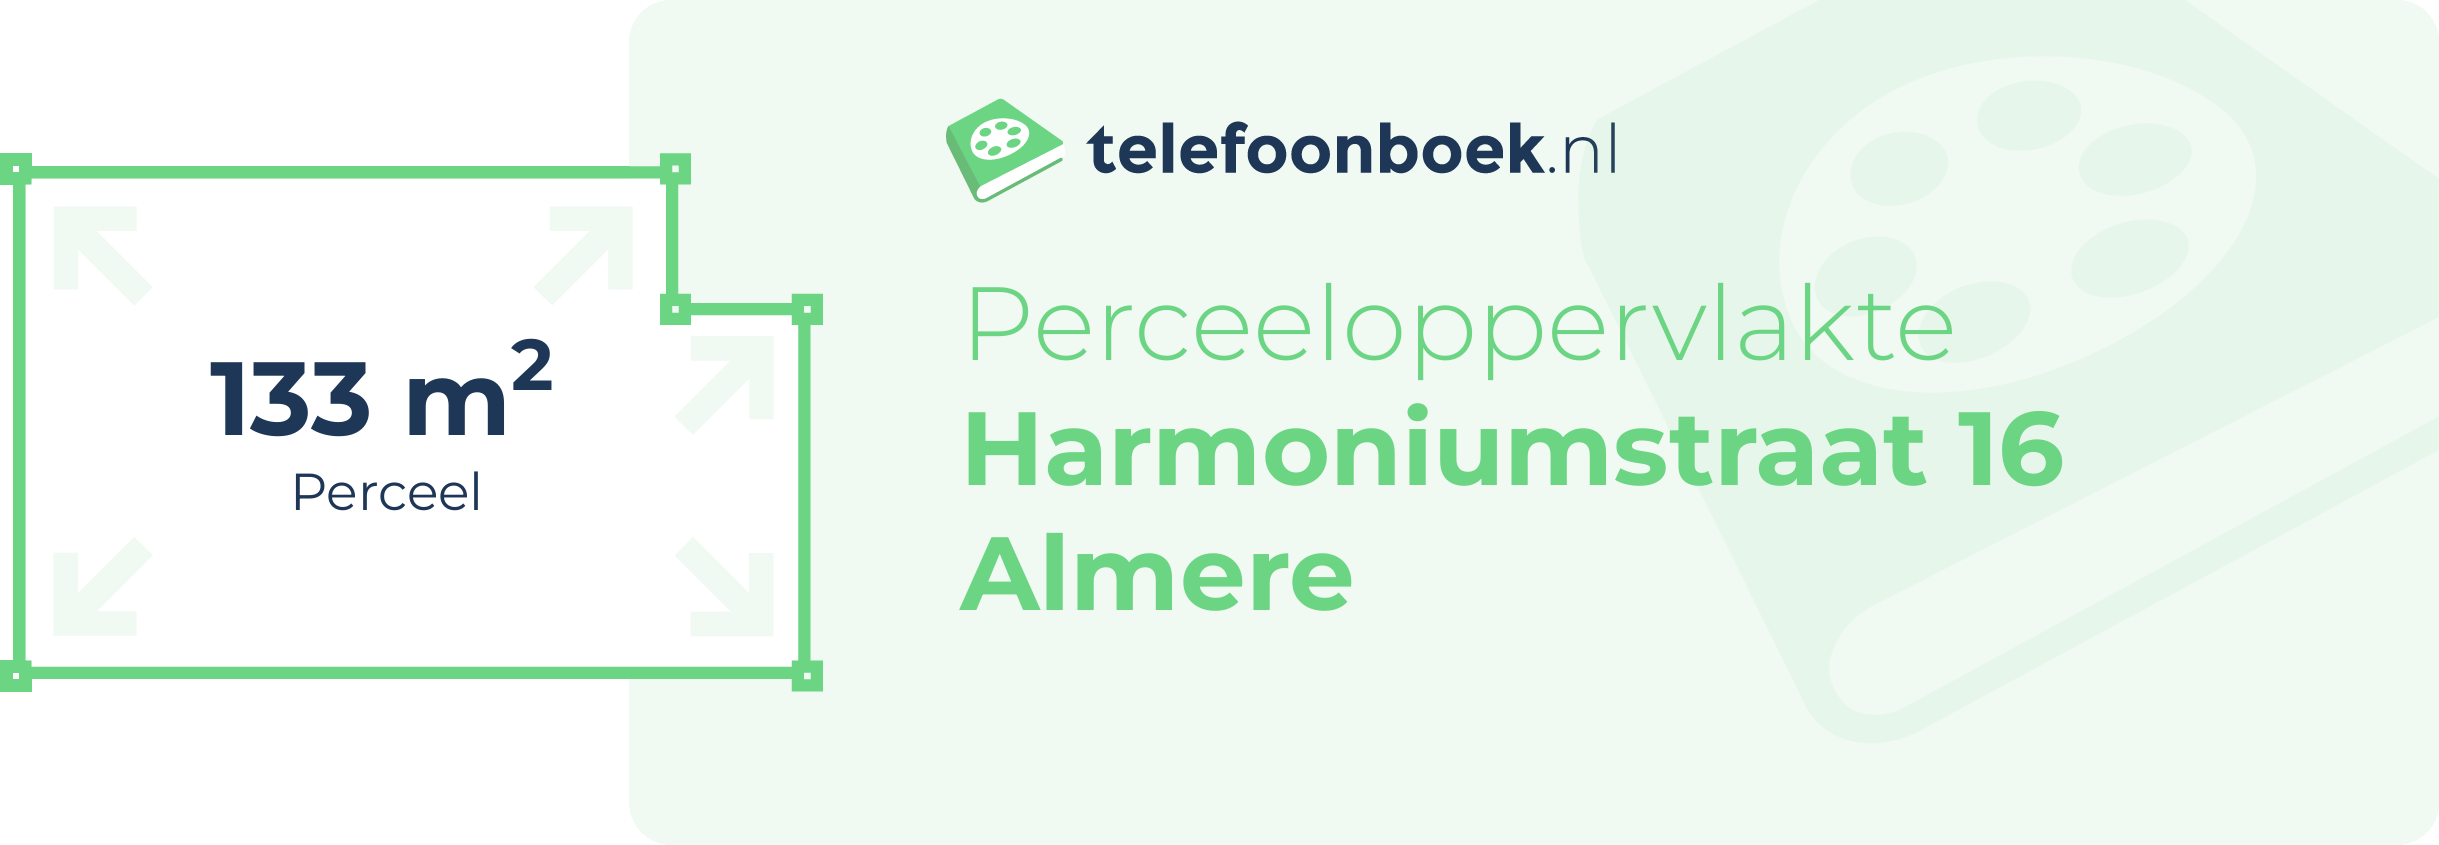 Perceeloppervlakte Harmoniumstraat 16 Almere